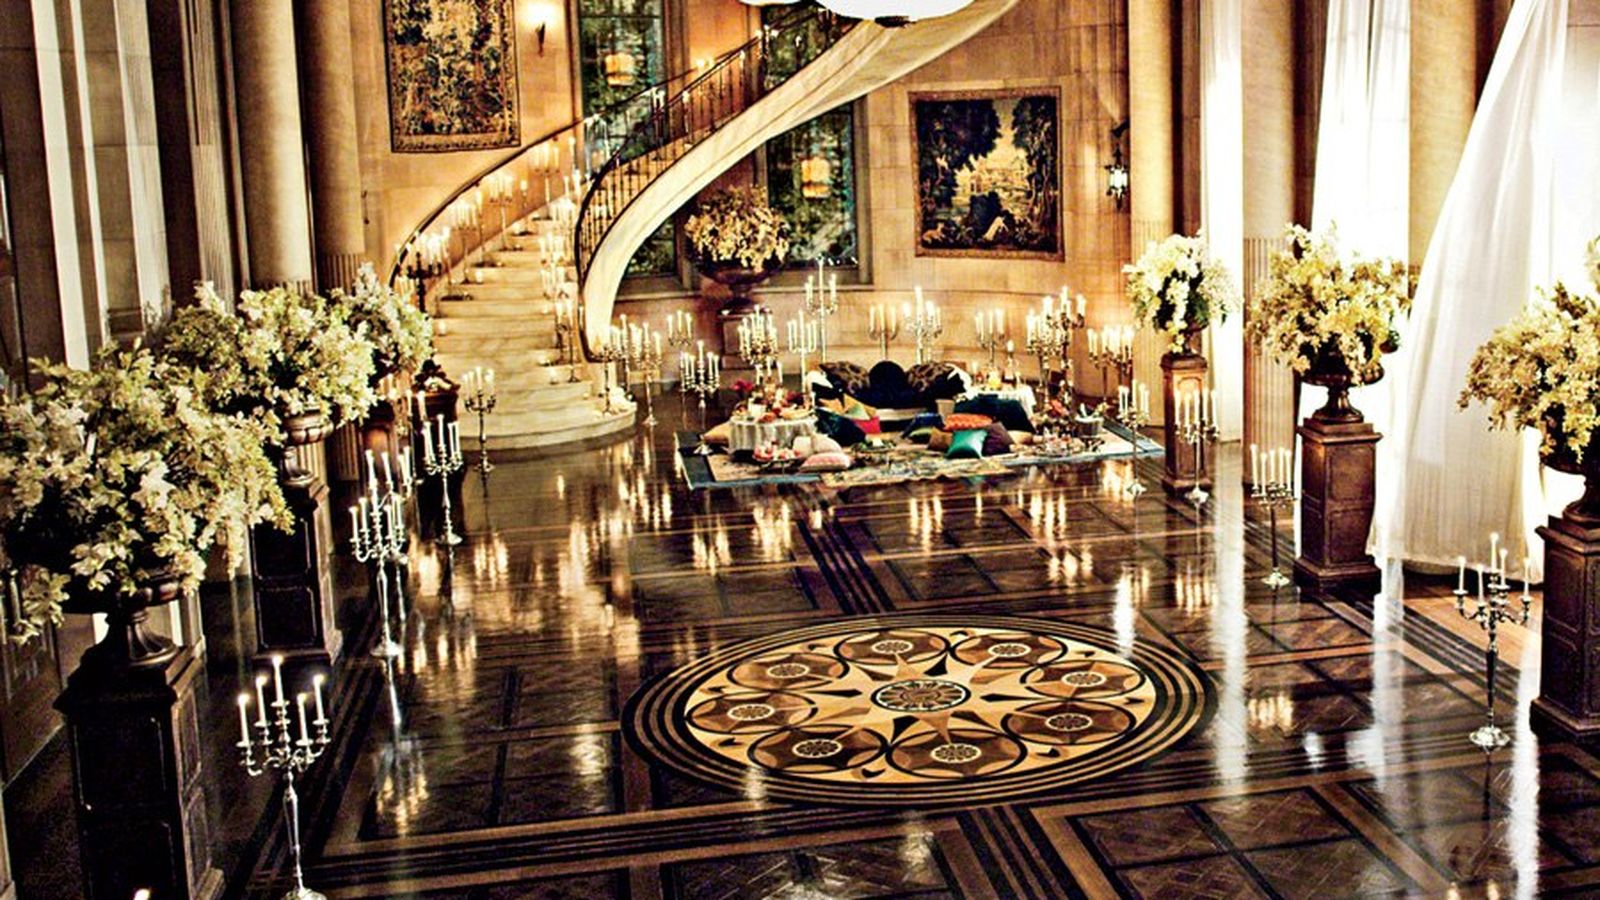 Opulent Art Deco Interior - The Great Gatsby movie